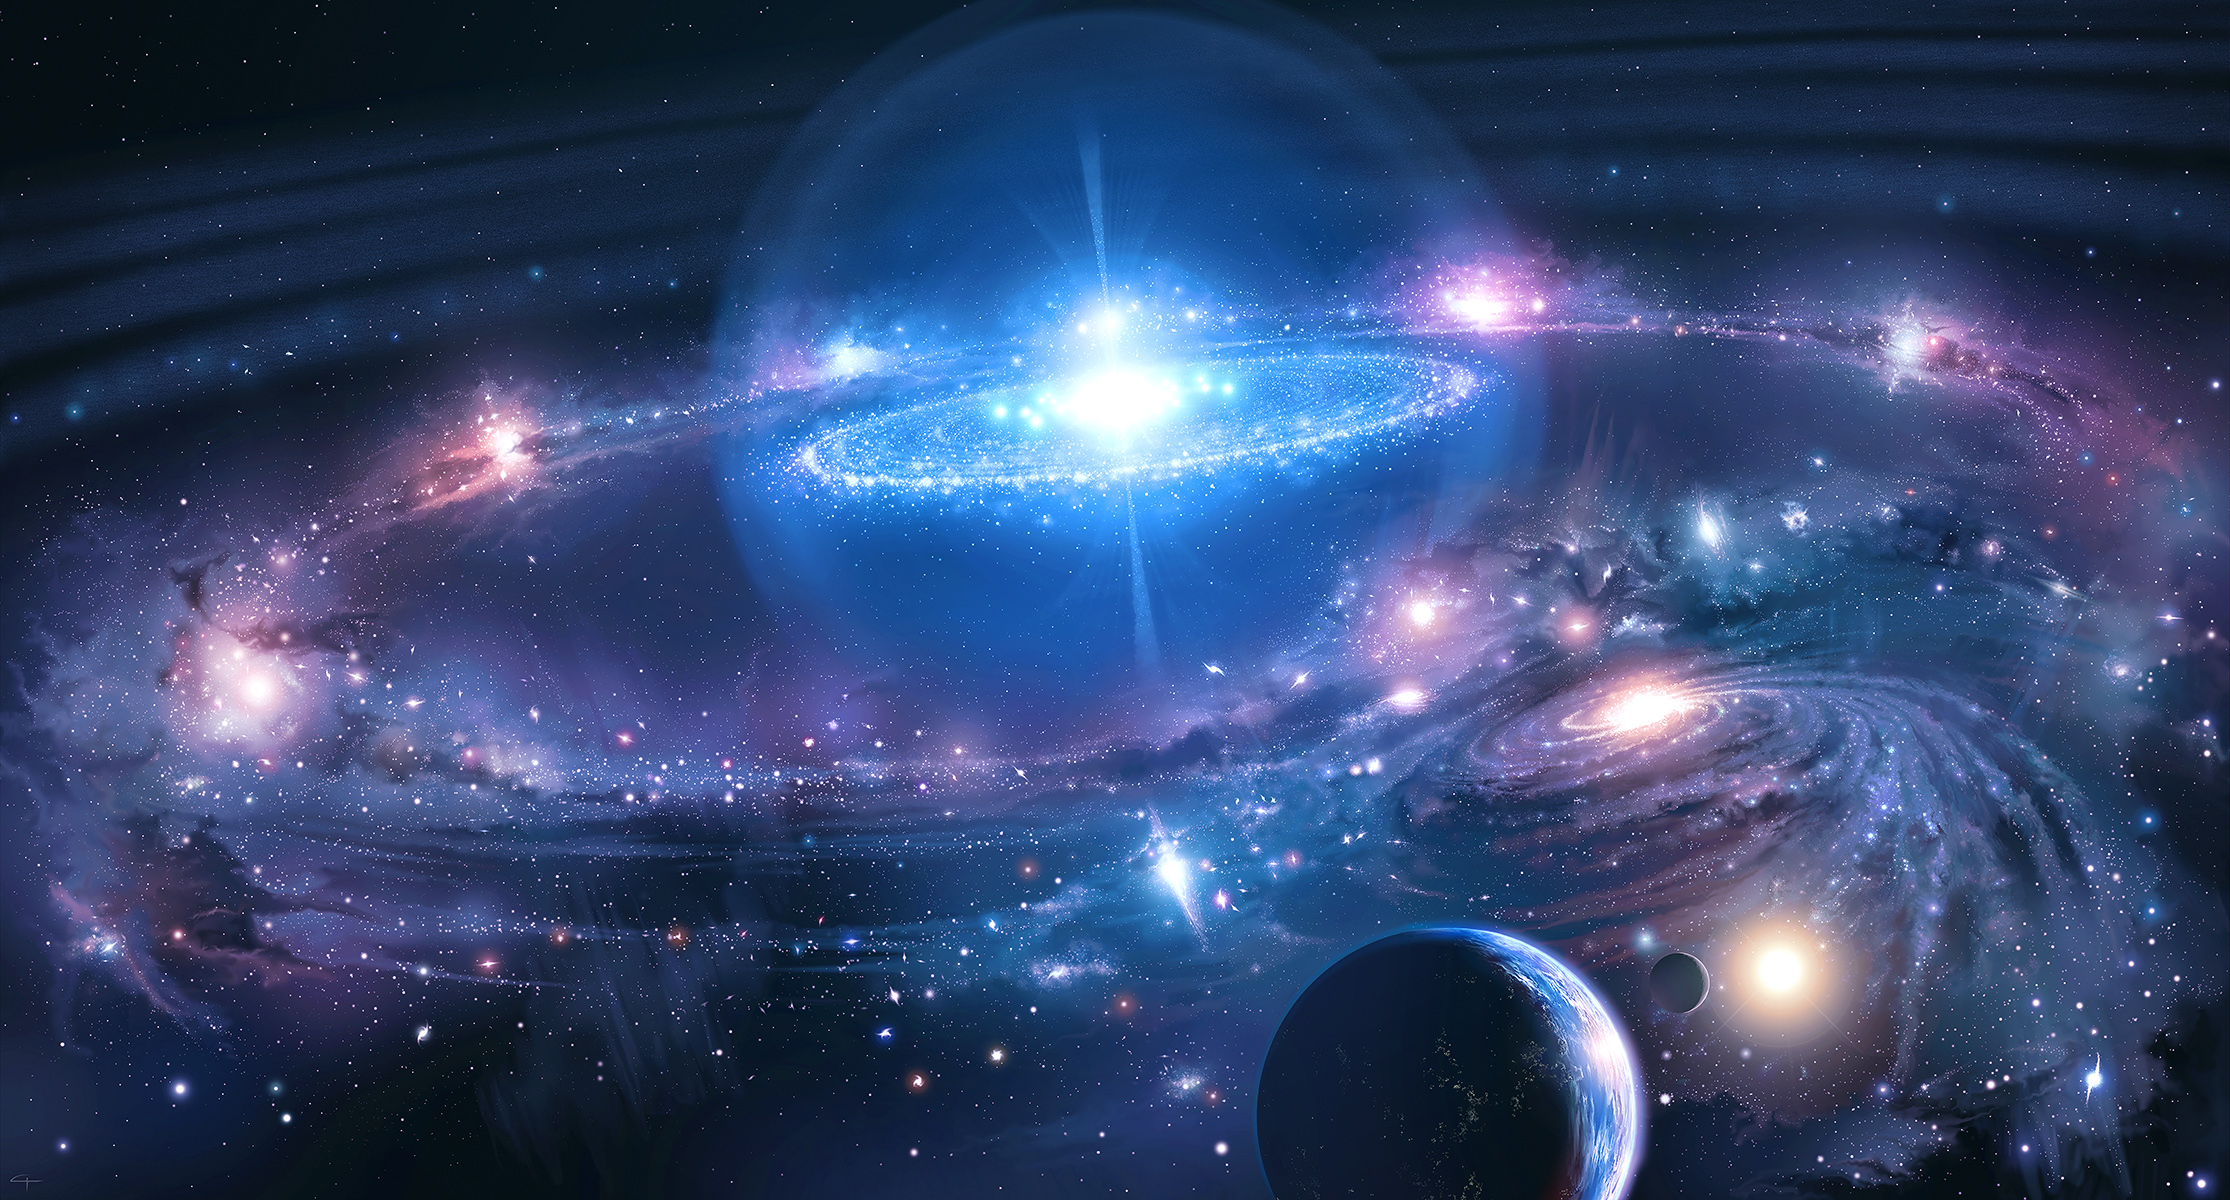 General 2230x1200 space universe stars galaxy bright glowing dark nebula shining blue colorful digital art